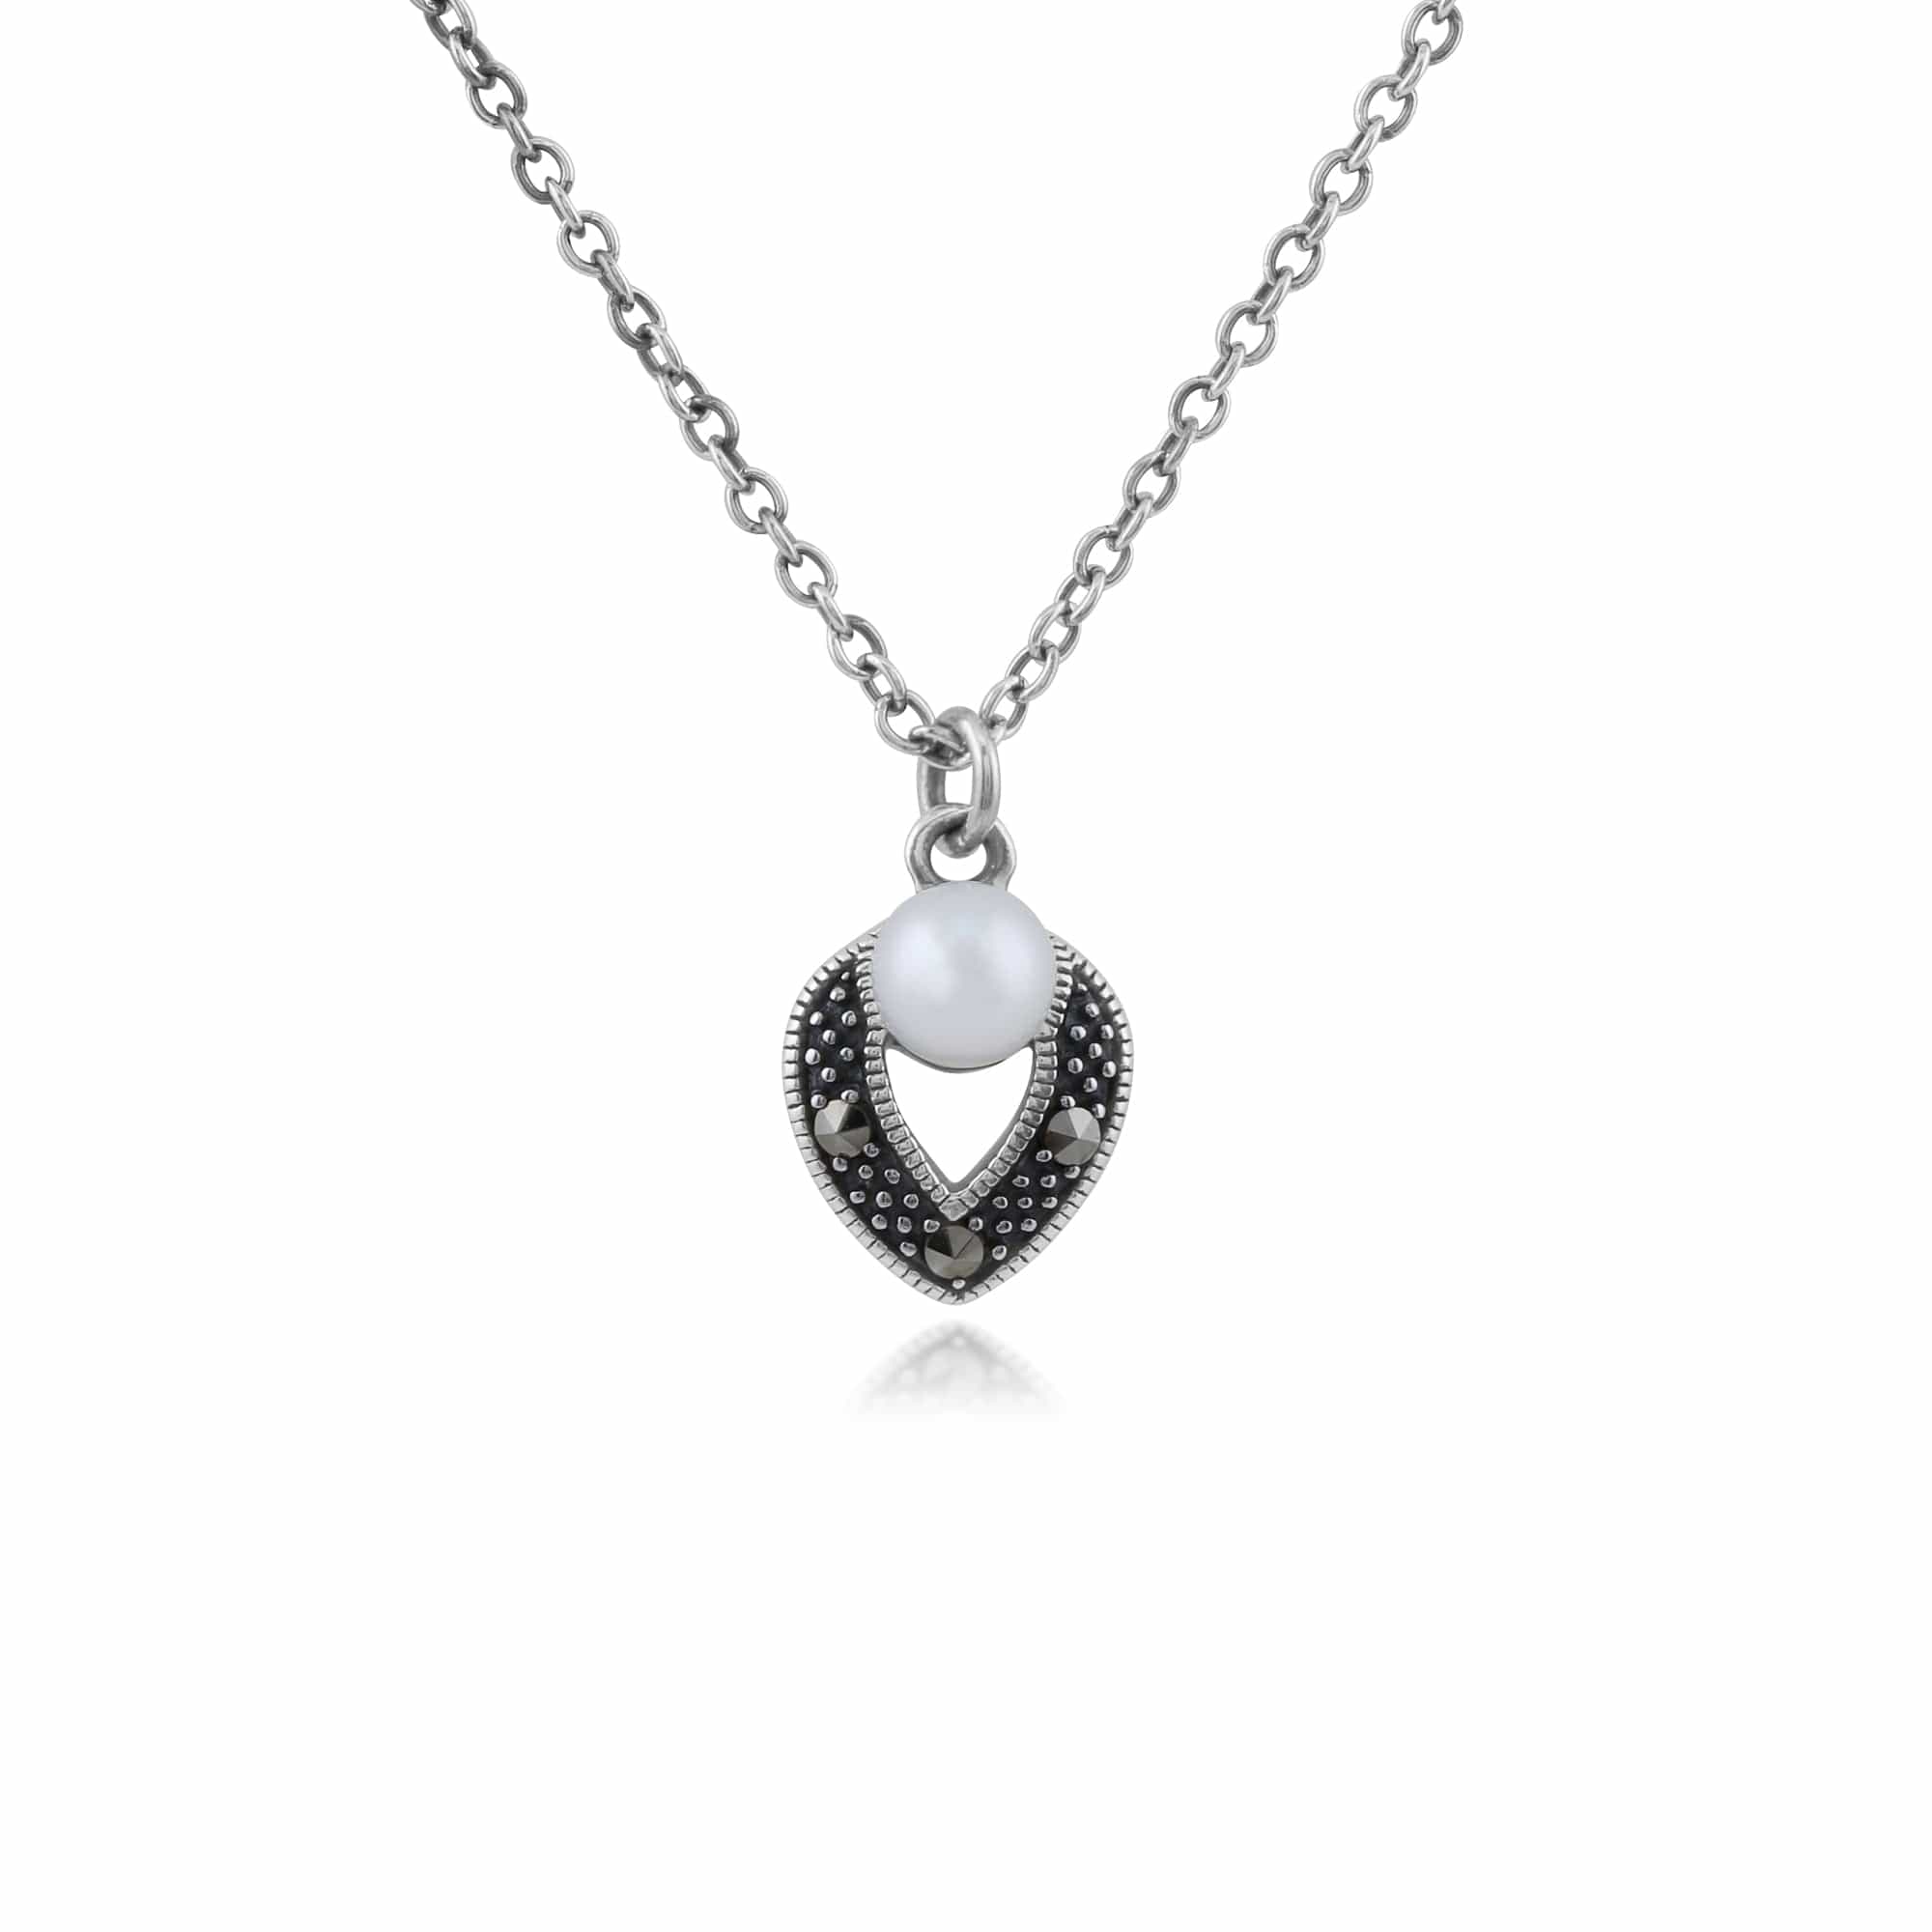 Gemondo Sterling Silver Art Deco Pearl & Marcasite Necklace Image